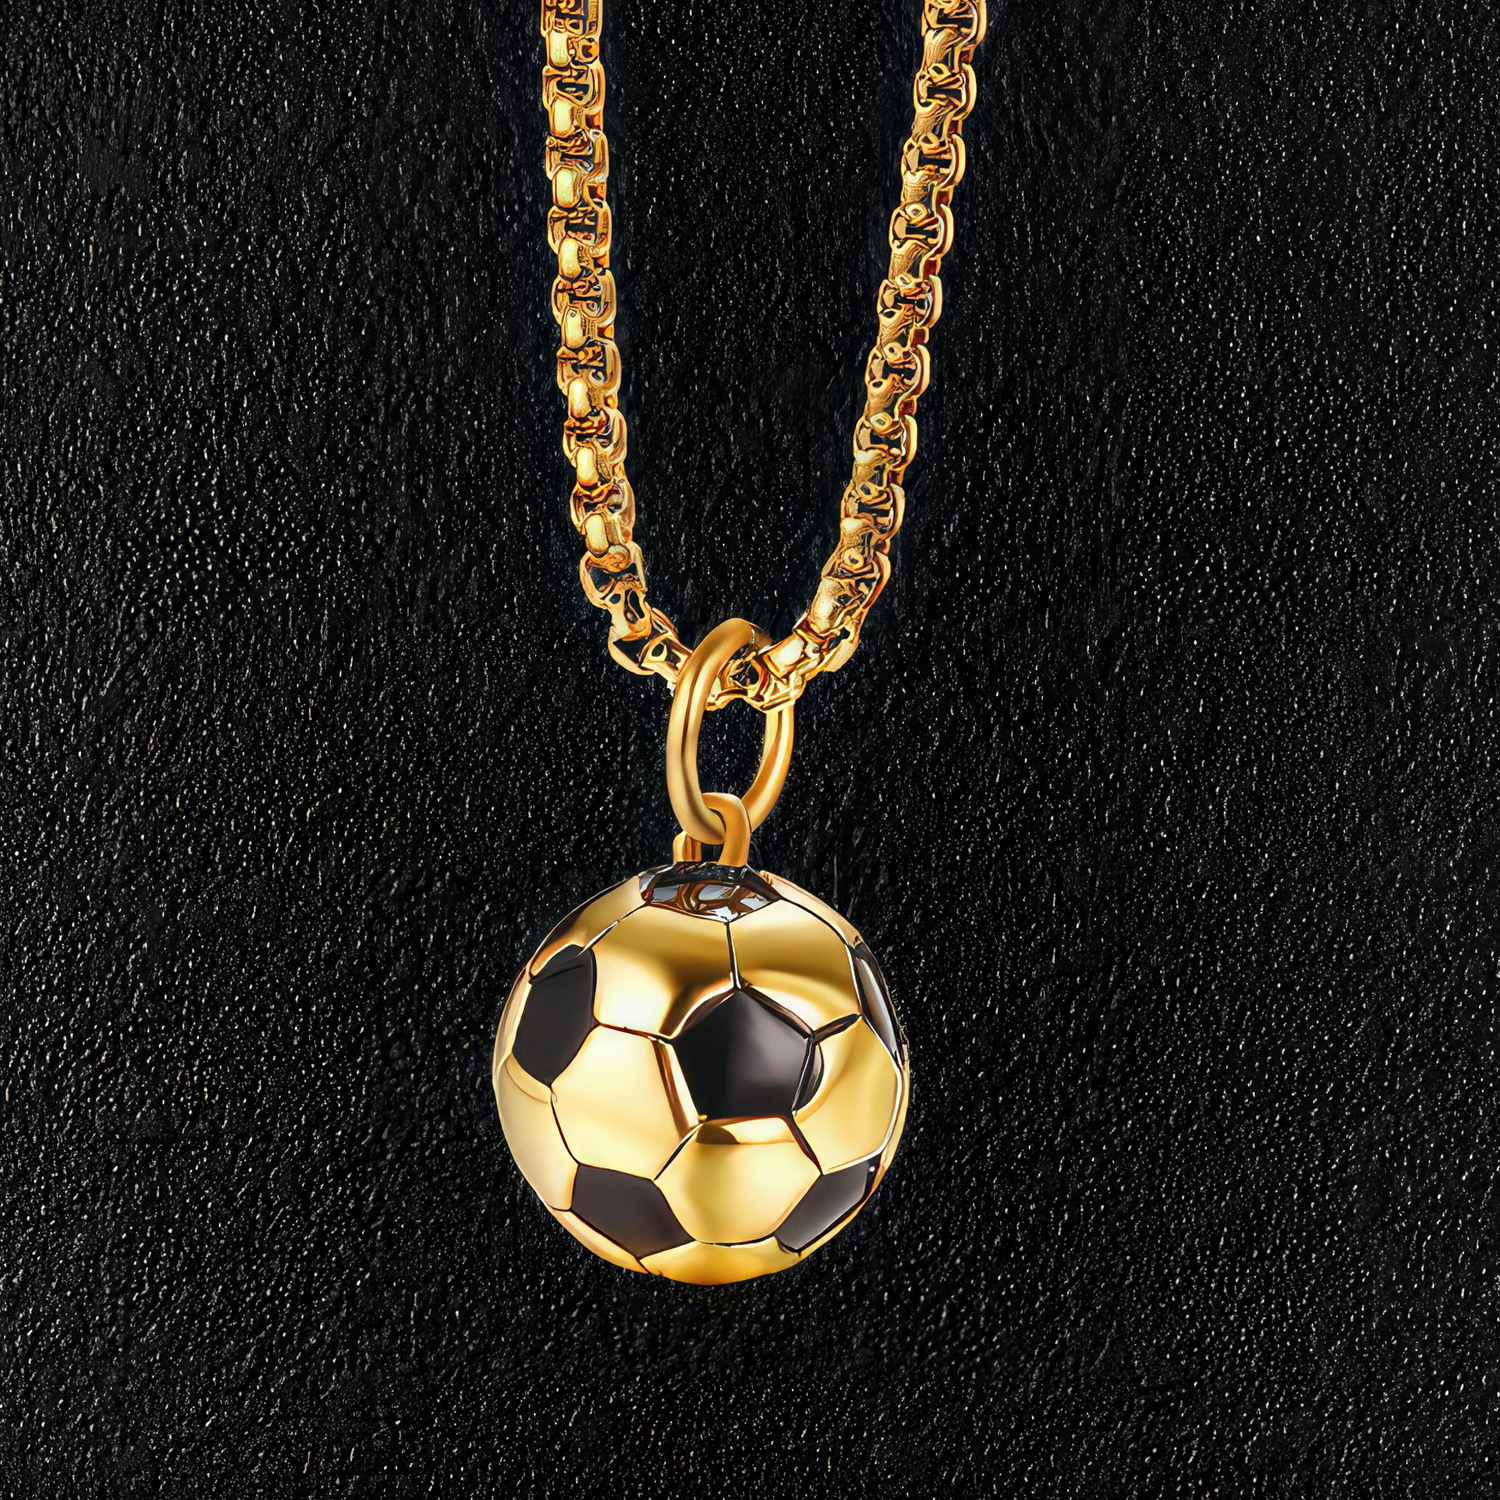 Football Pendant & Necklace